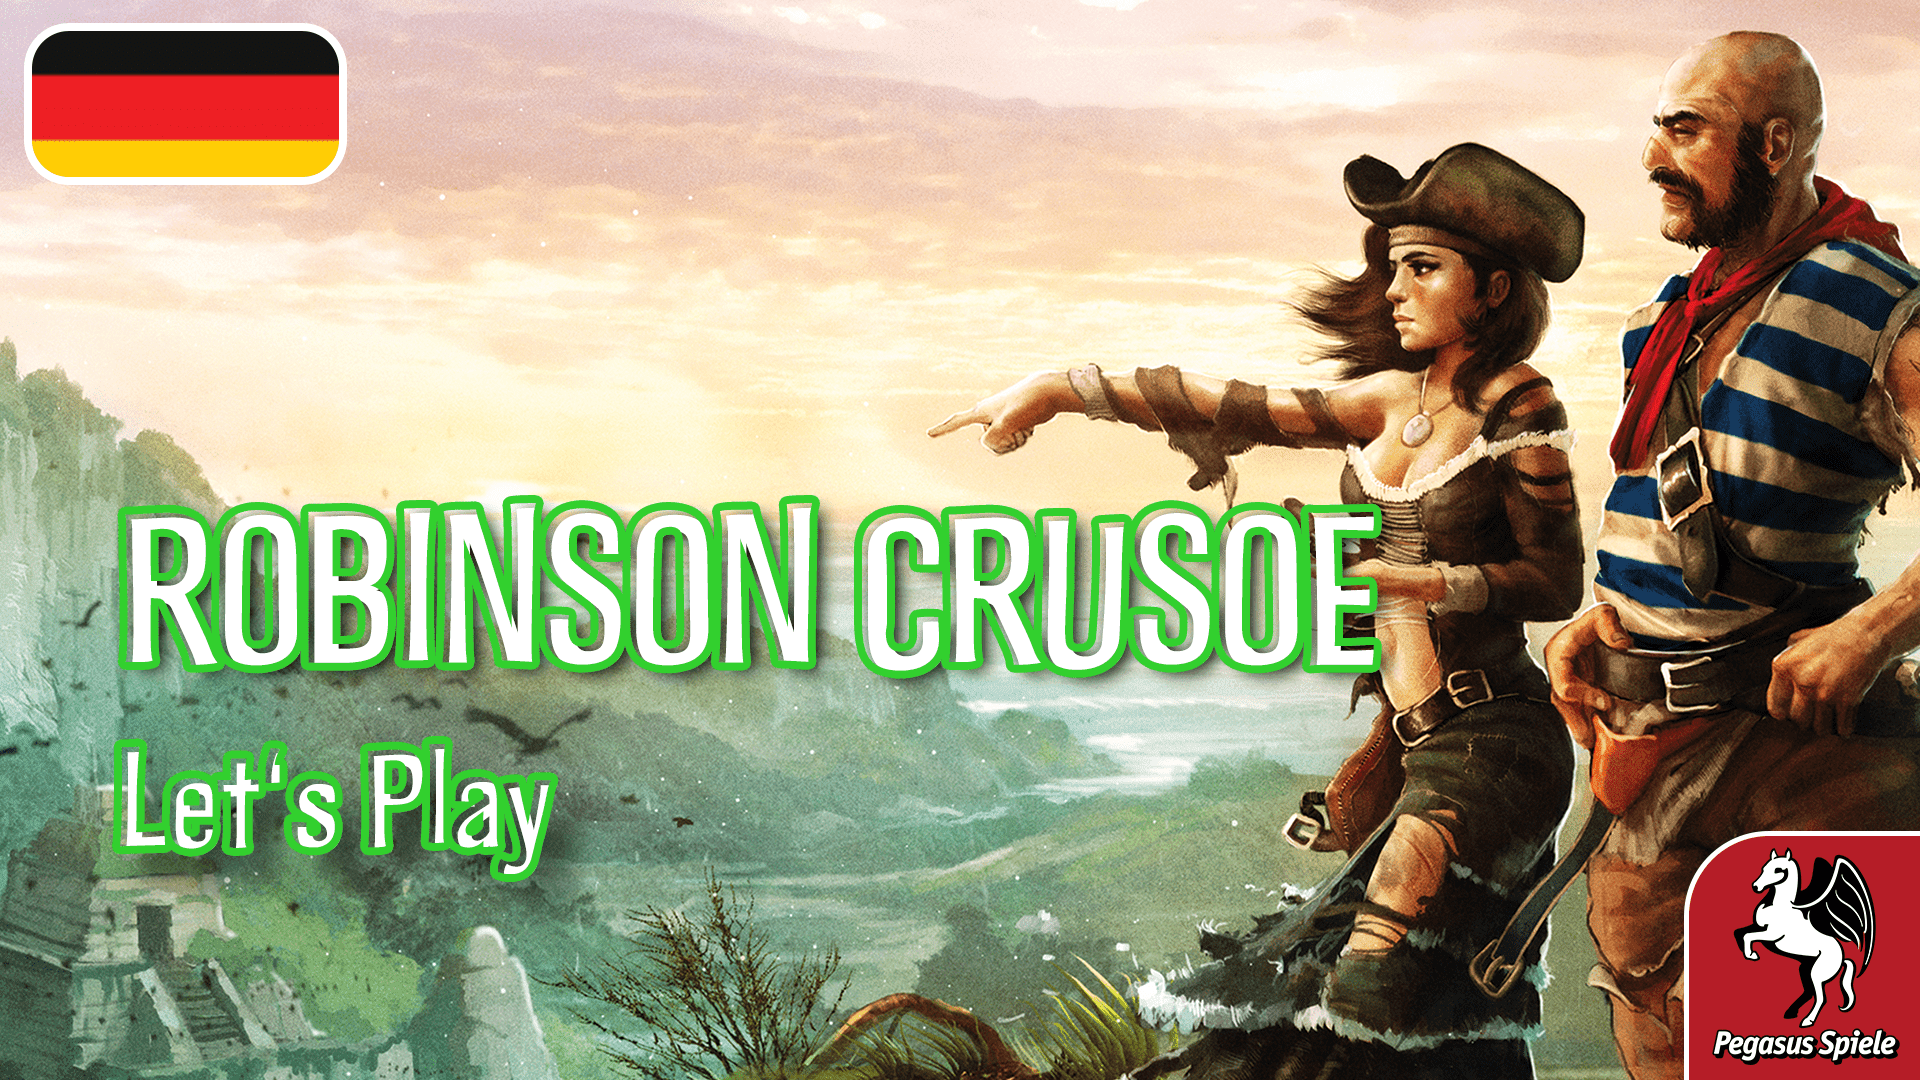 Robinson Crusoe Let's Play